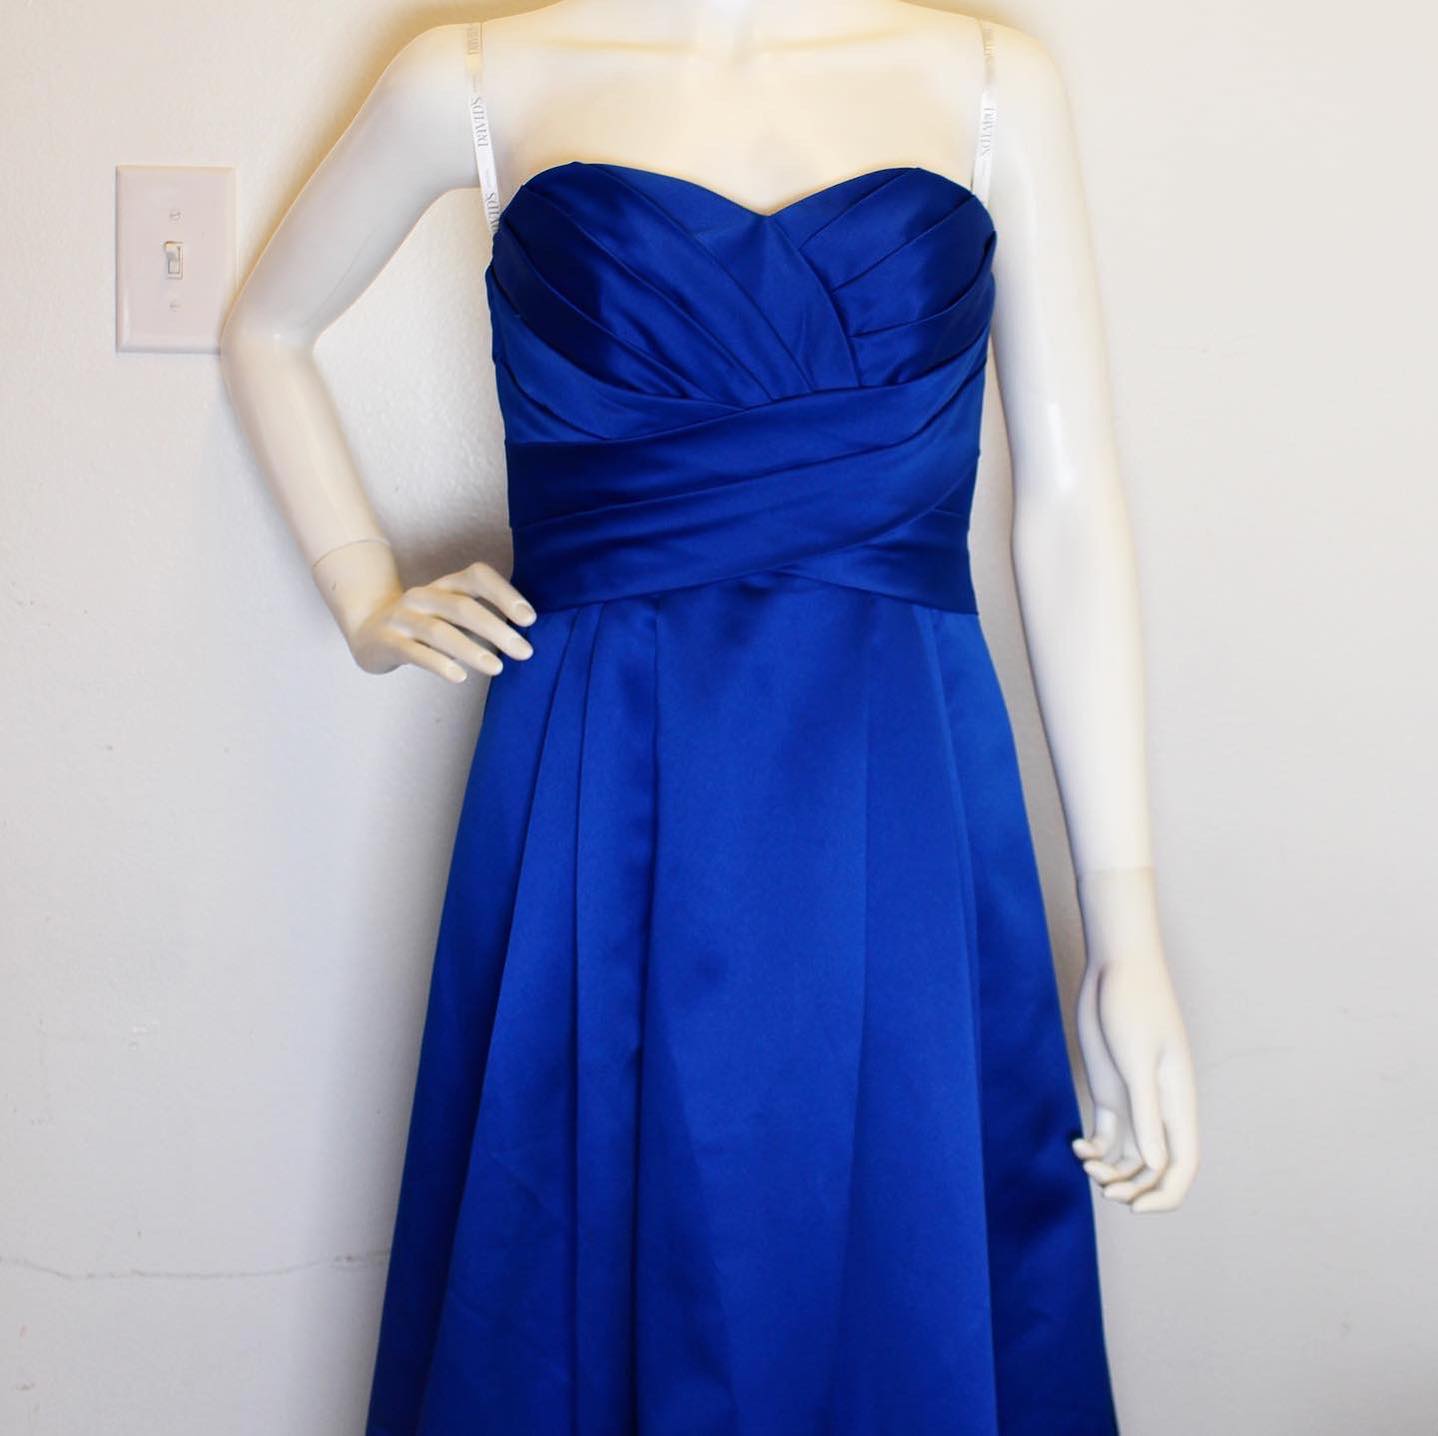 DAVIDS BRIDAL 41524 Royal Blue Strapless Formal Dress Size 2 1